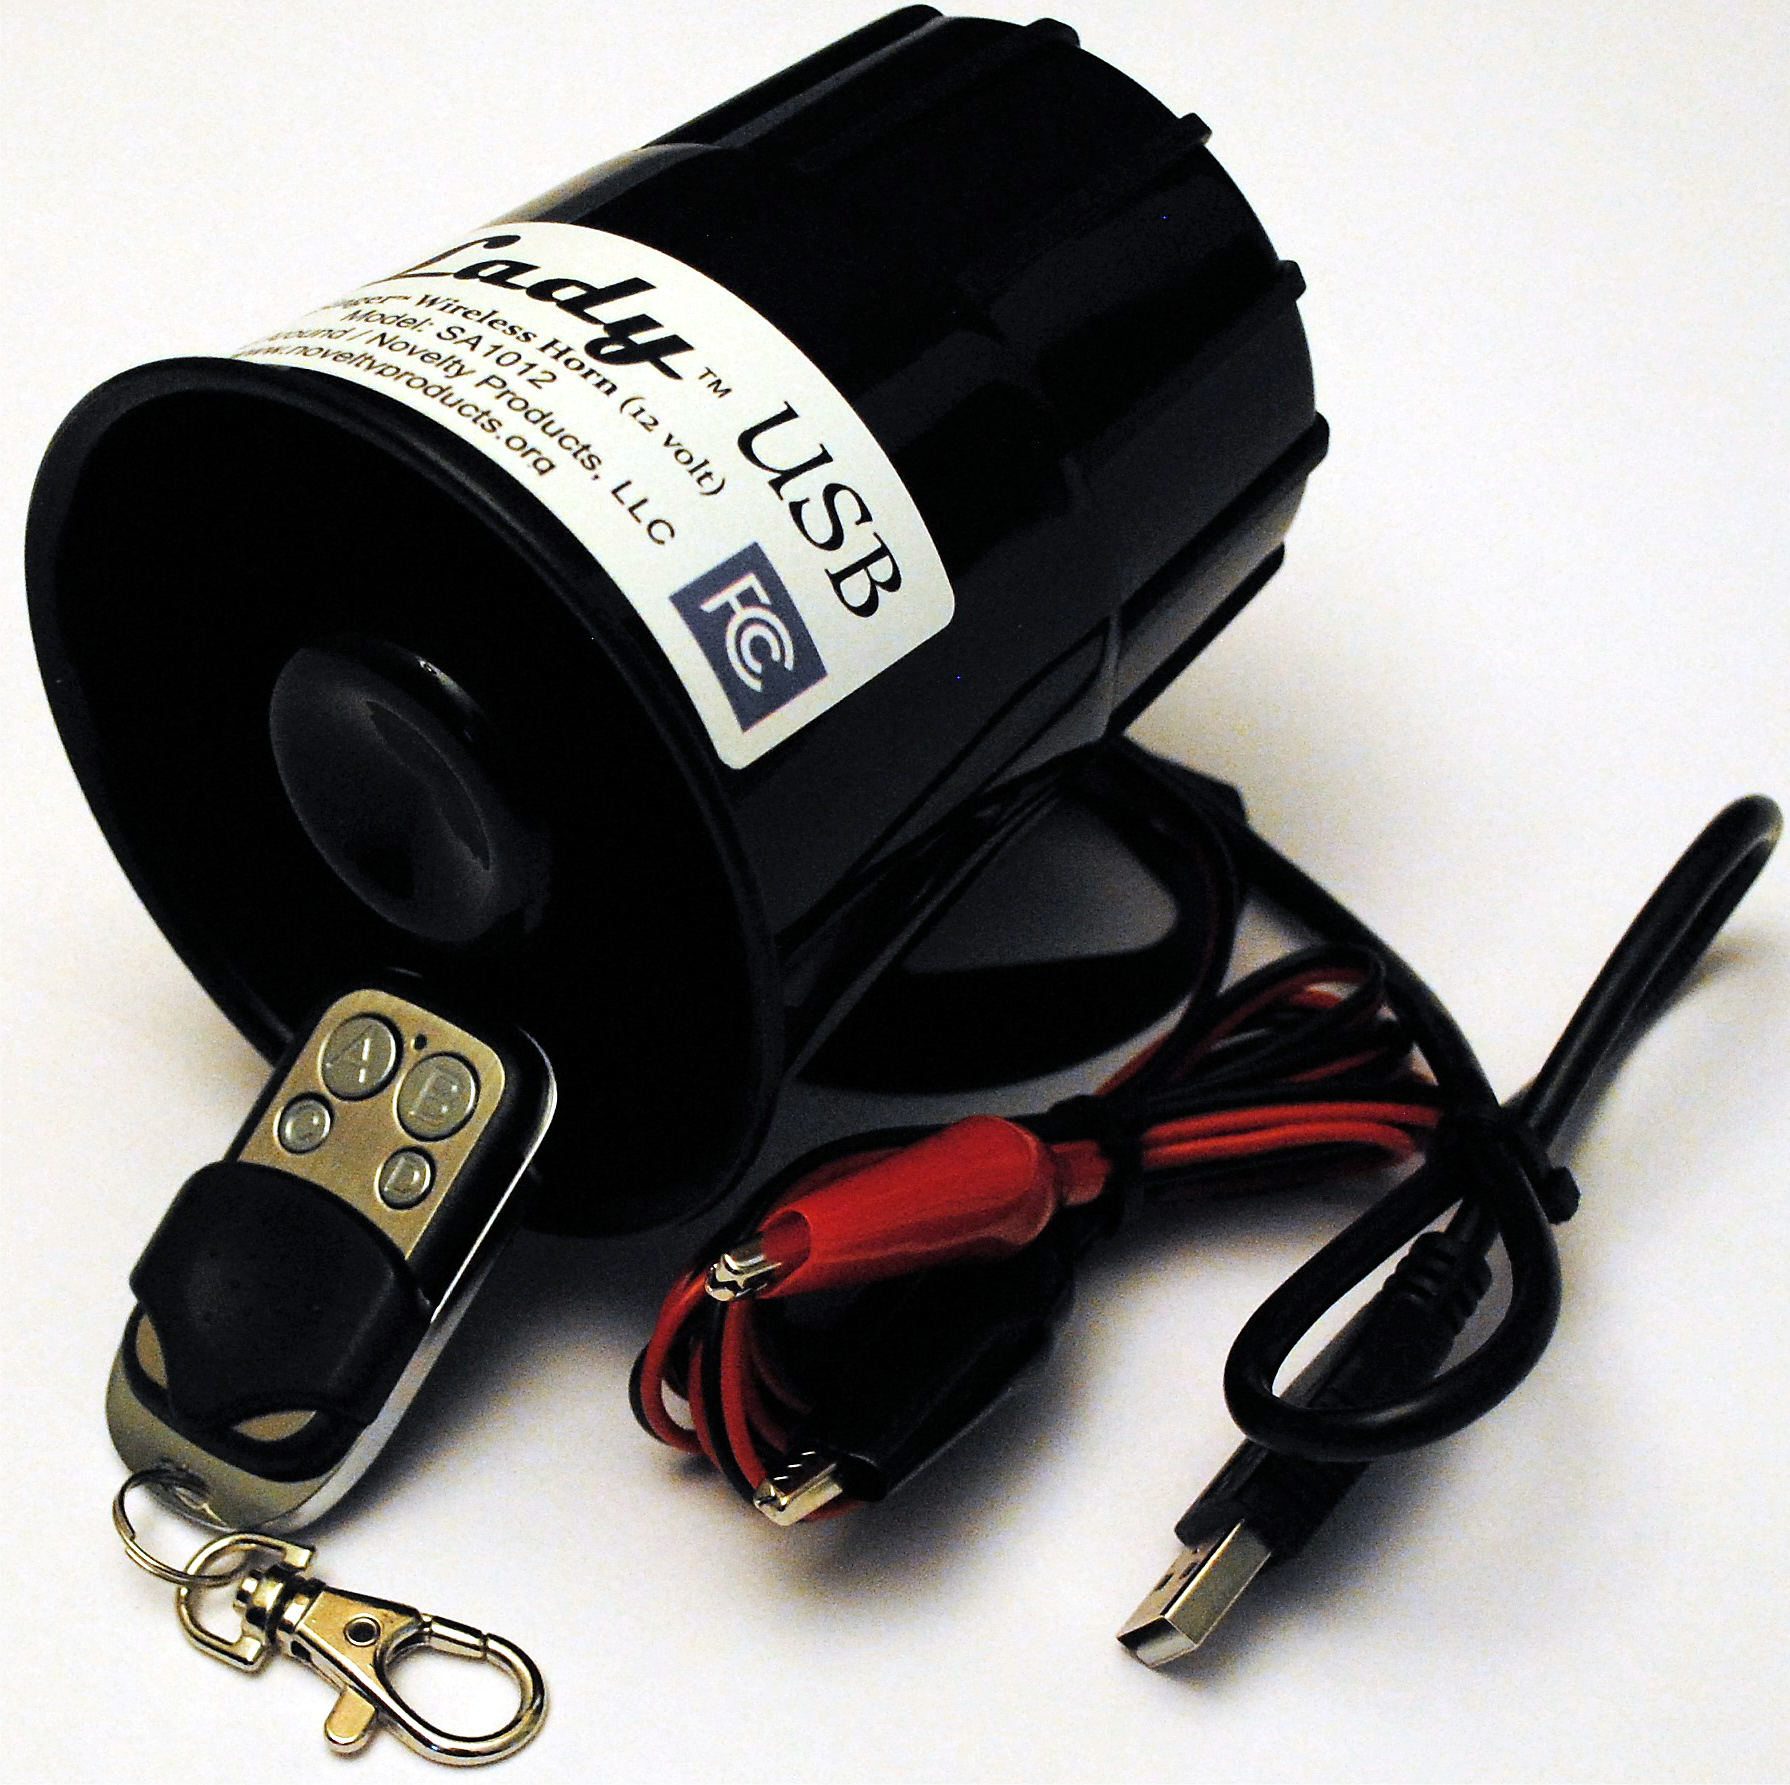 University Of Virginia Cavaliers USB Car Horn with Wireless KeyFOB Remote